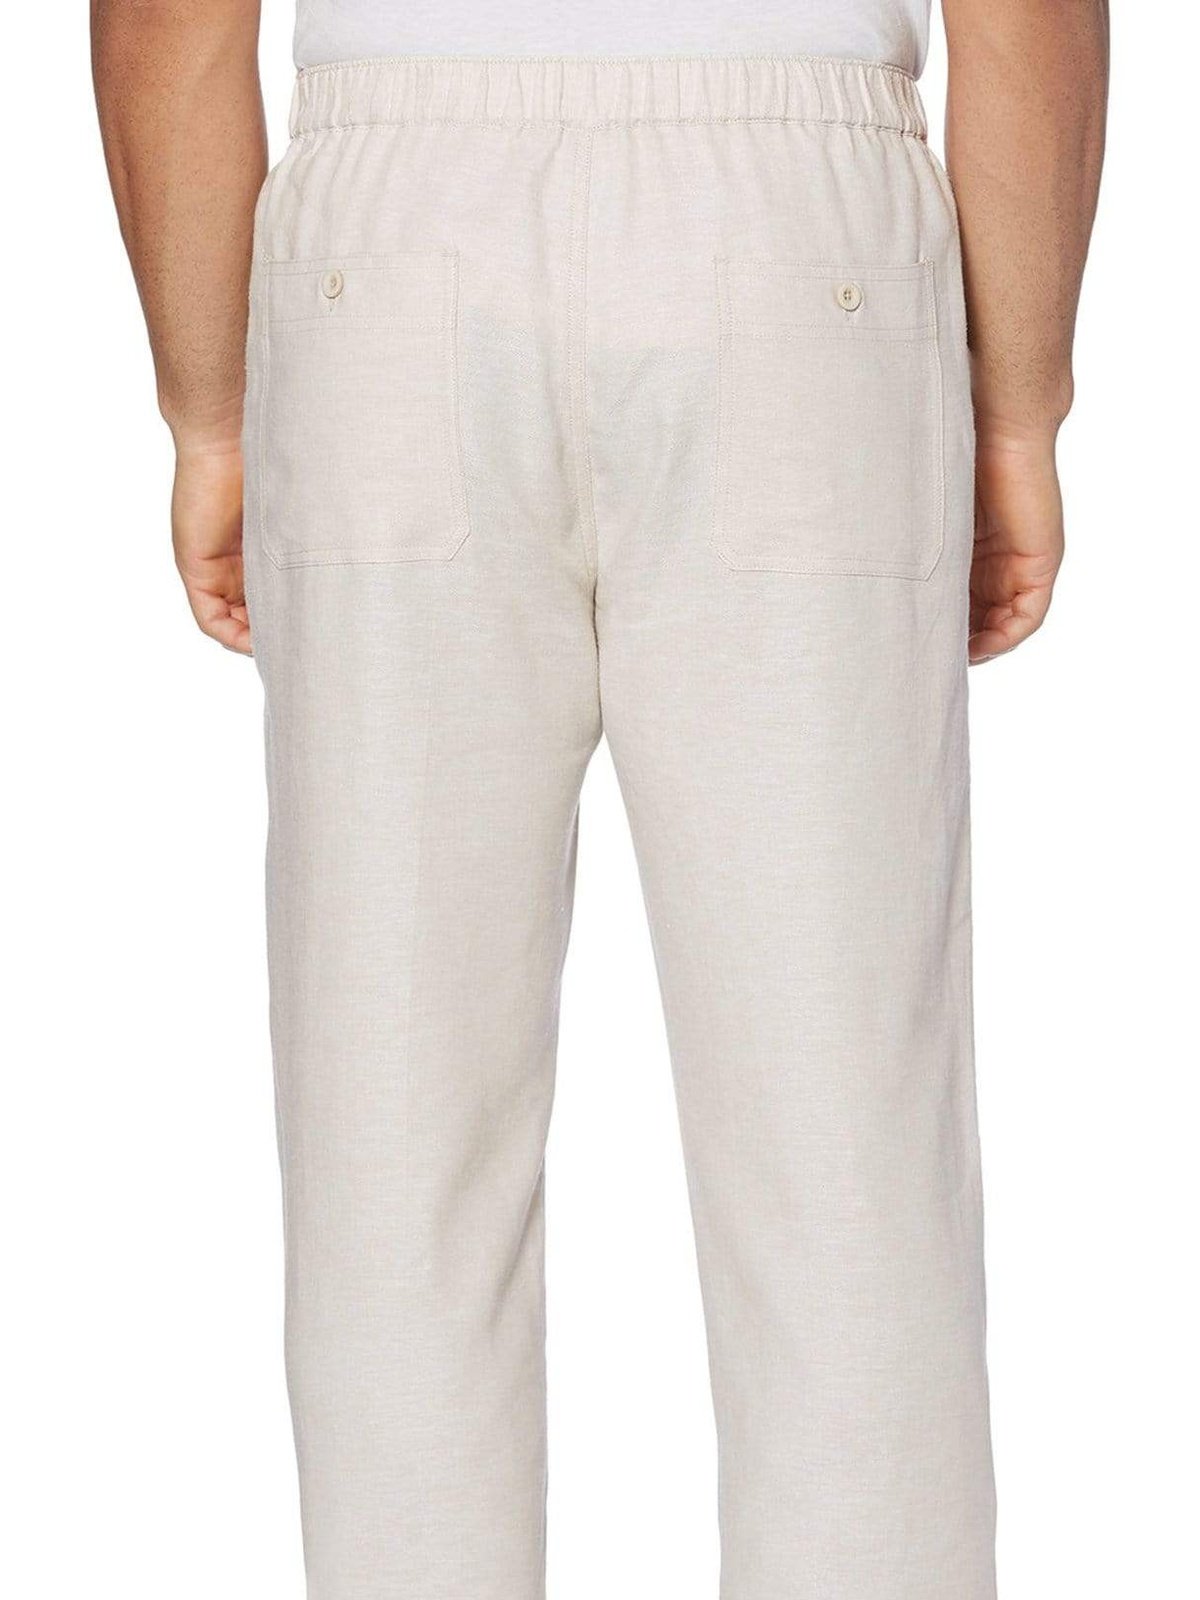 Cubavera Sale Pants Cubavera Classic Fit Solid Khaki Flat Front Linen Blend Dress Pants